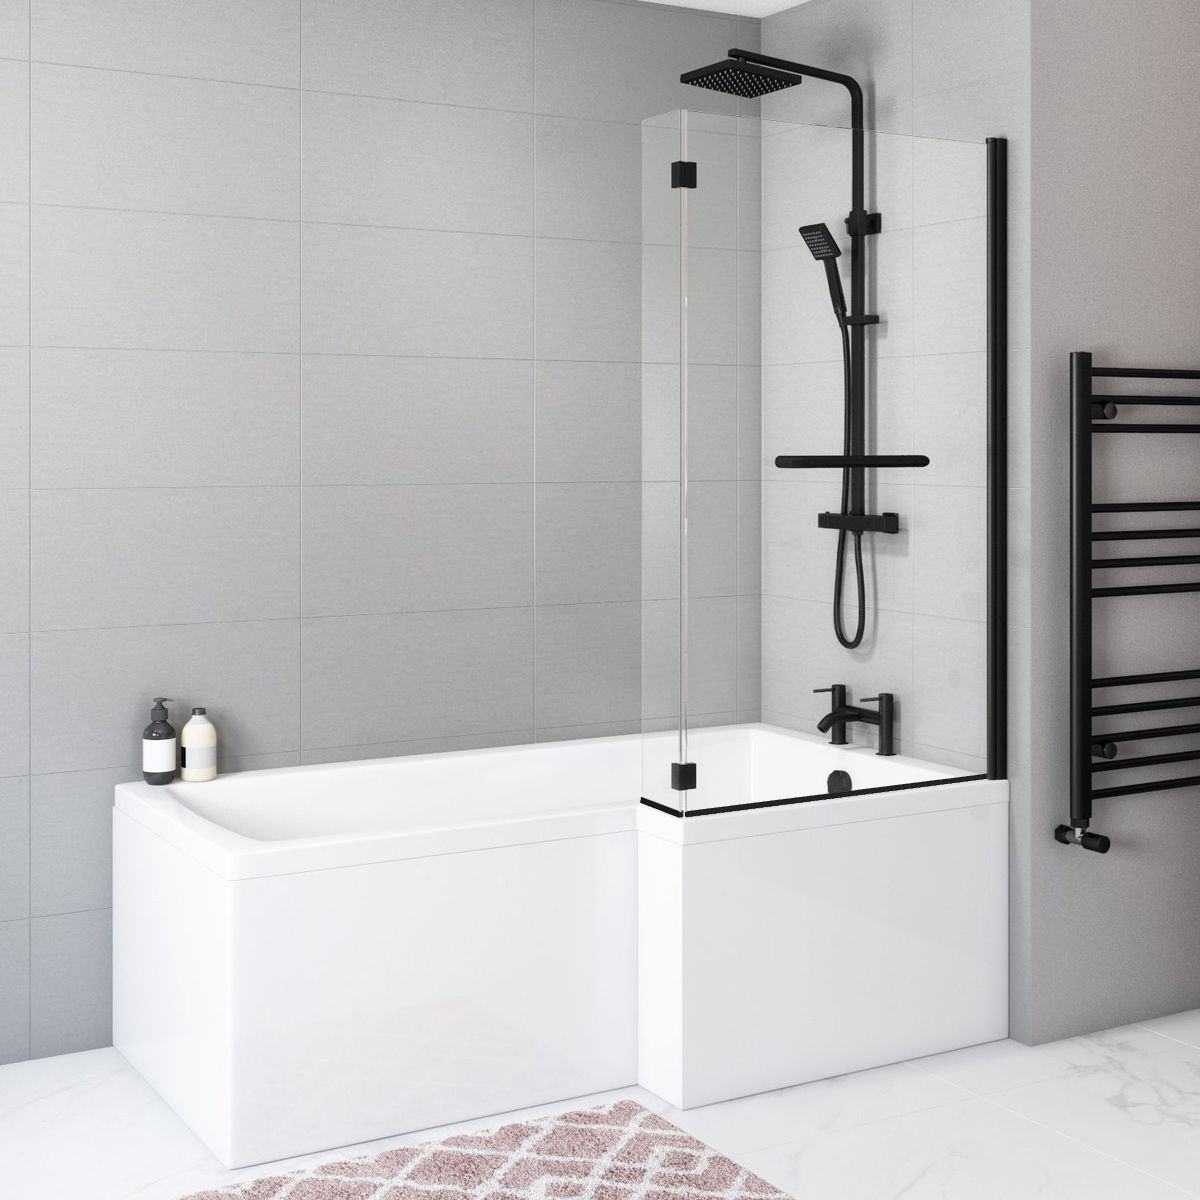 Modern bathroom with L shaped bath and black shower.